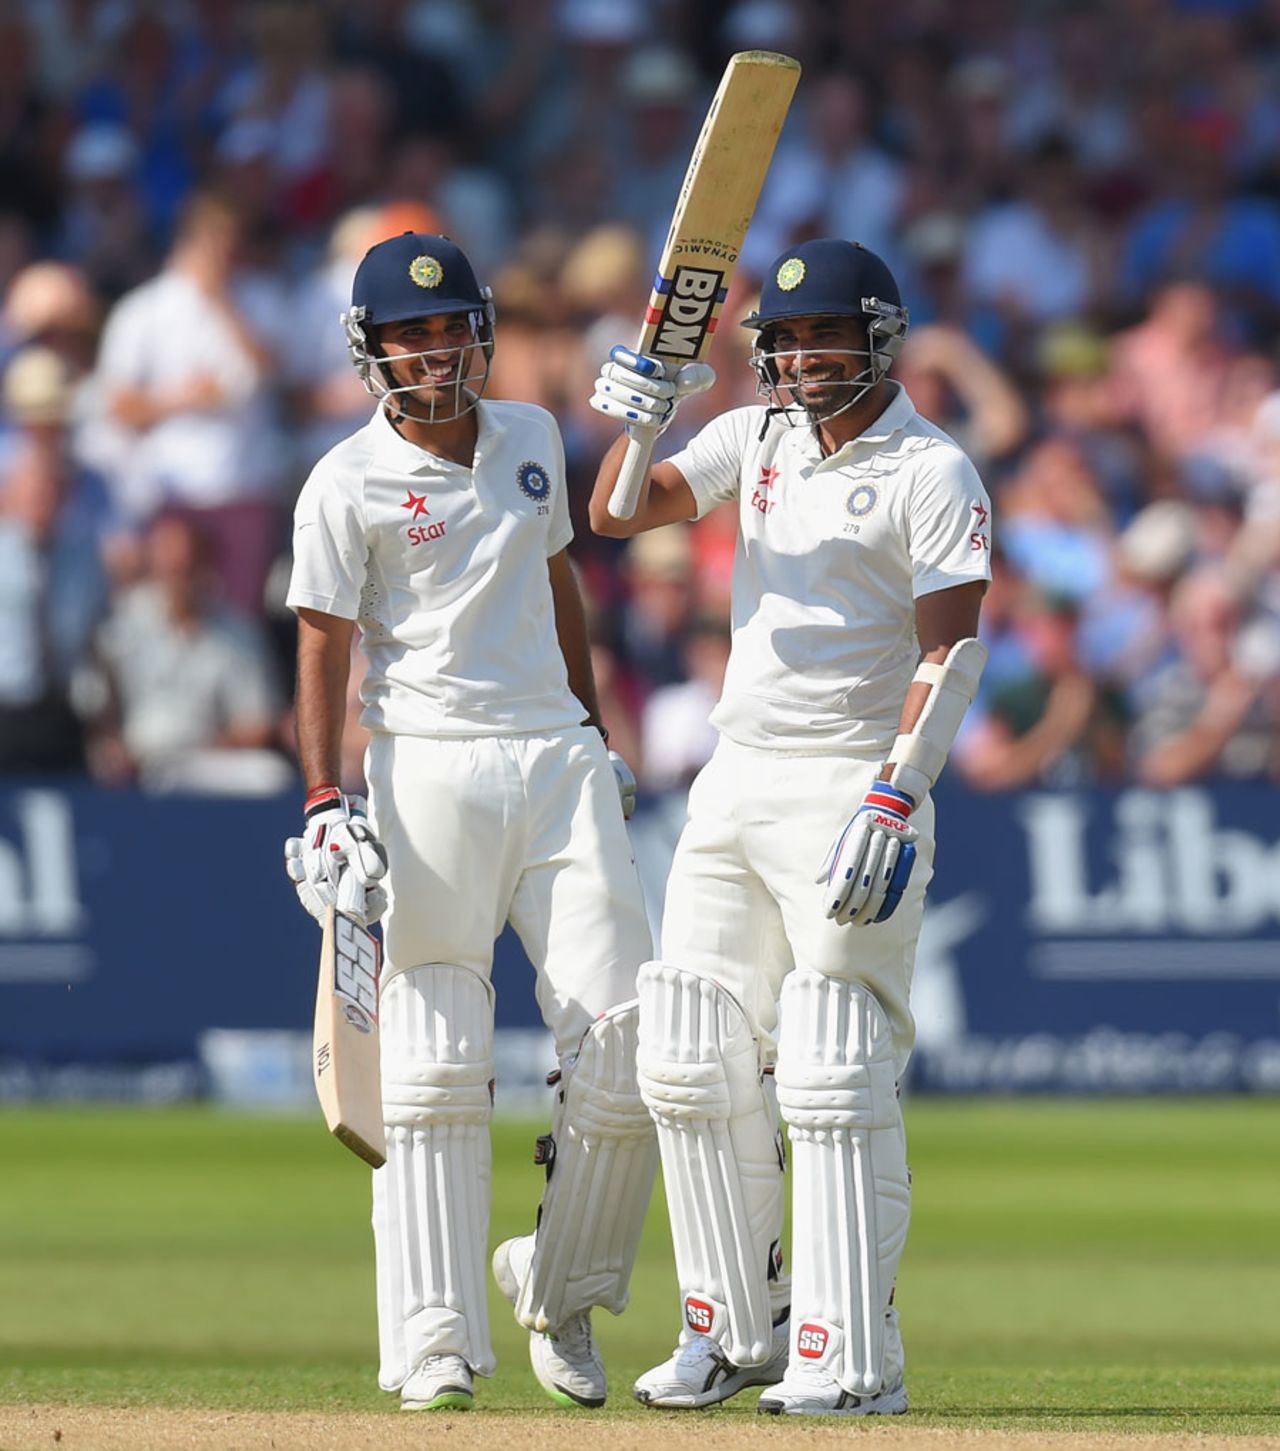 Mohammed Shami and Bhuvneshwar Kumar both raised fifties, England v India, 1st Investec Test, Trent Bridge, 2nd day, July 10, 2014